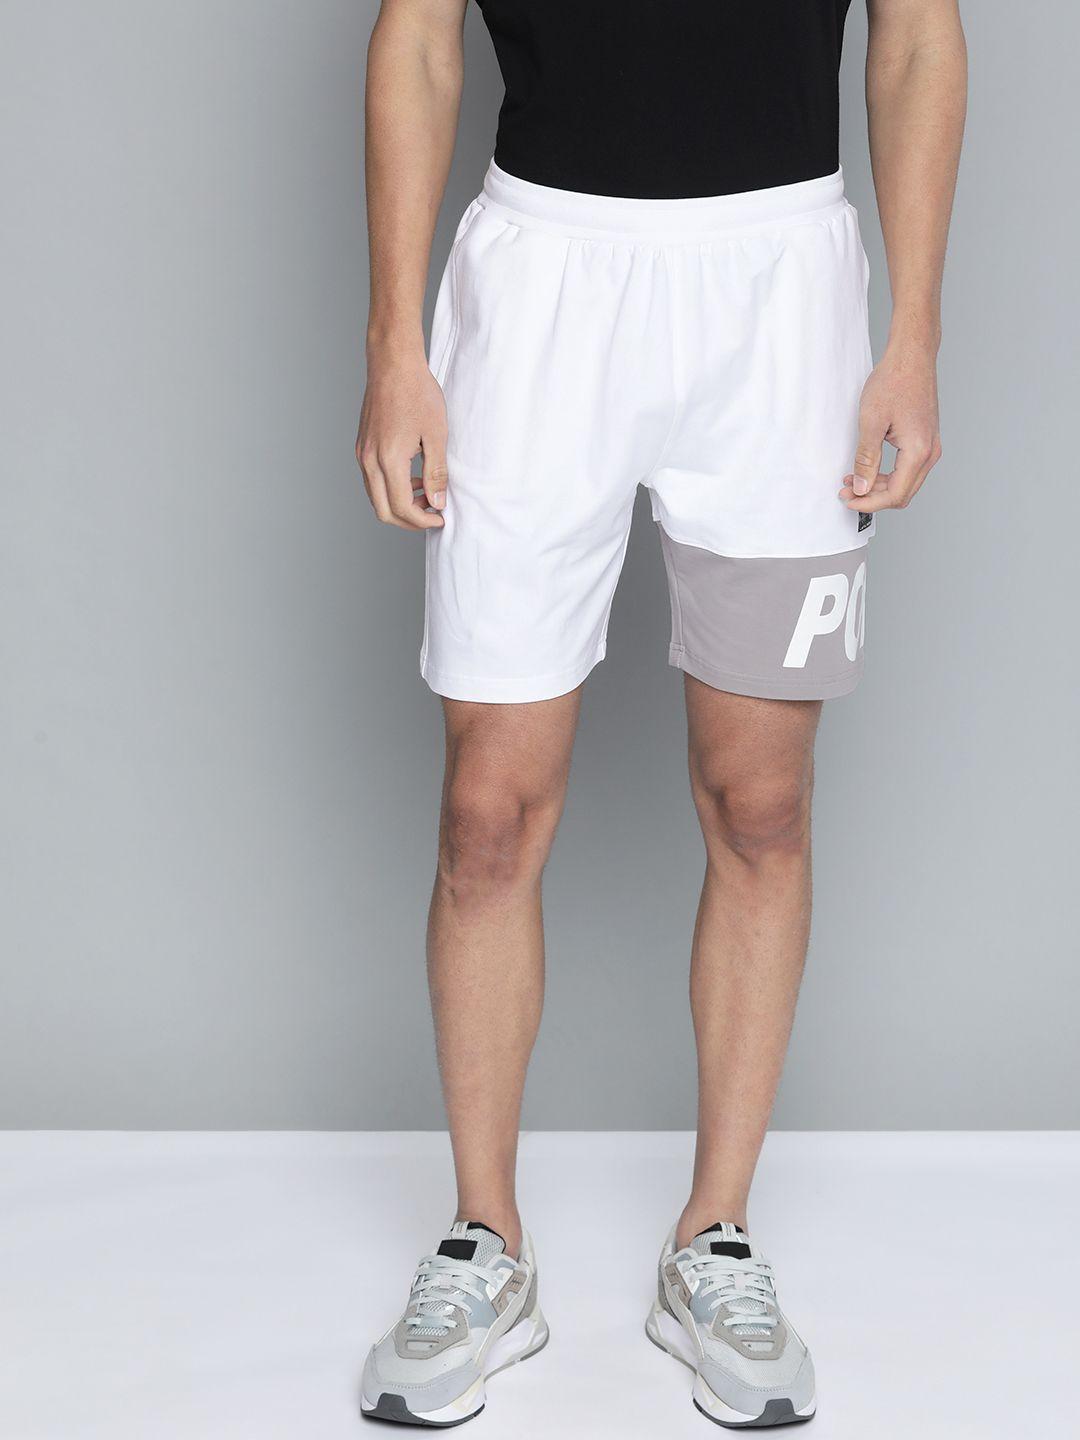 hrx by hrithik roshan lifestyle men optic white & wet weather lycra typography shorts